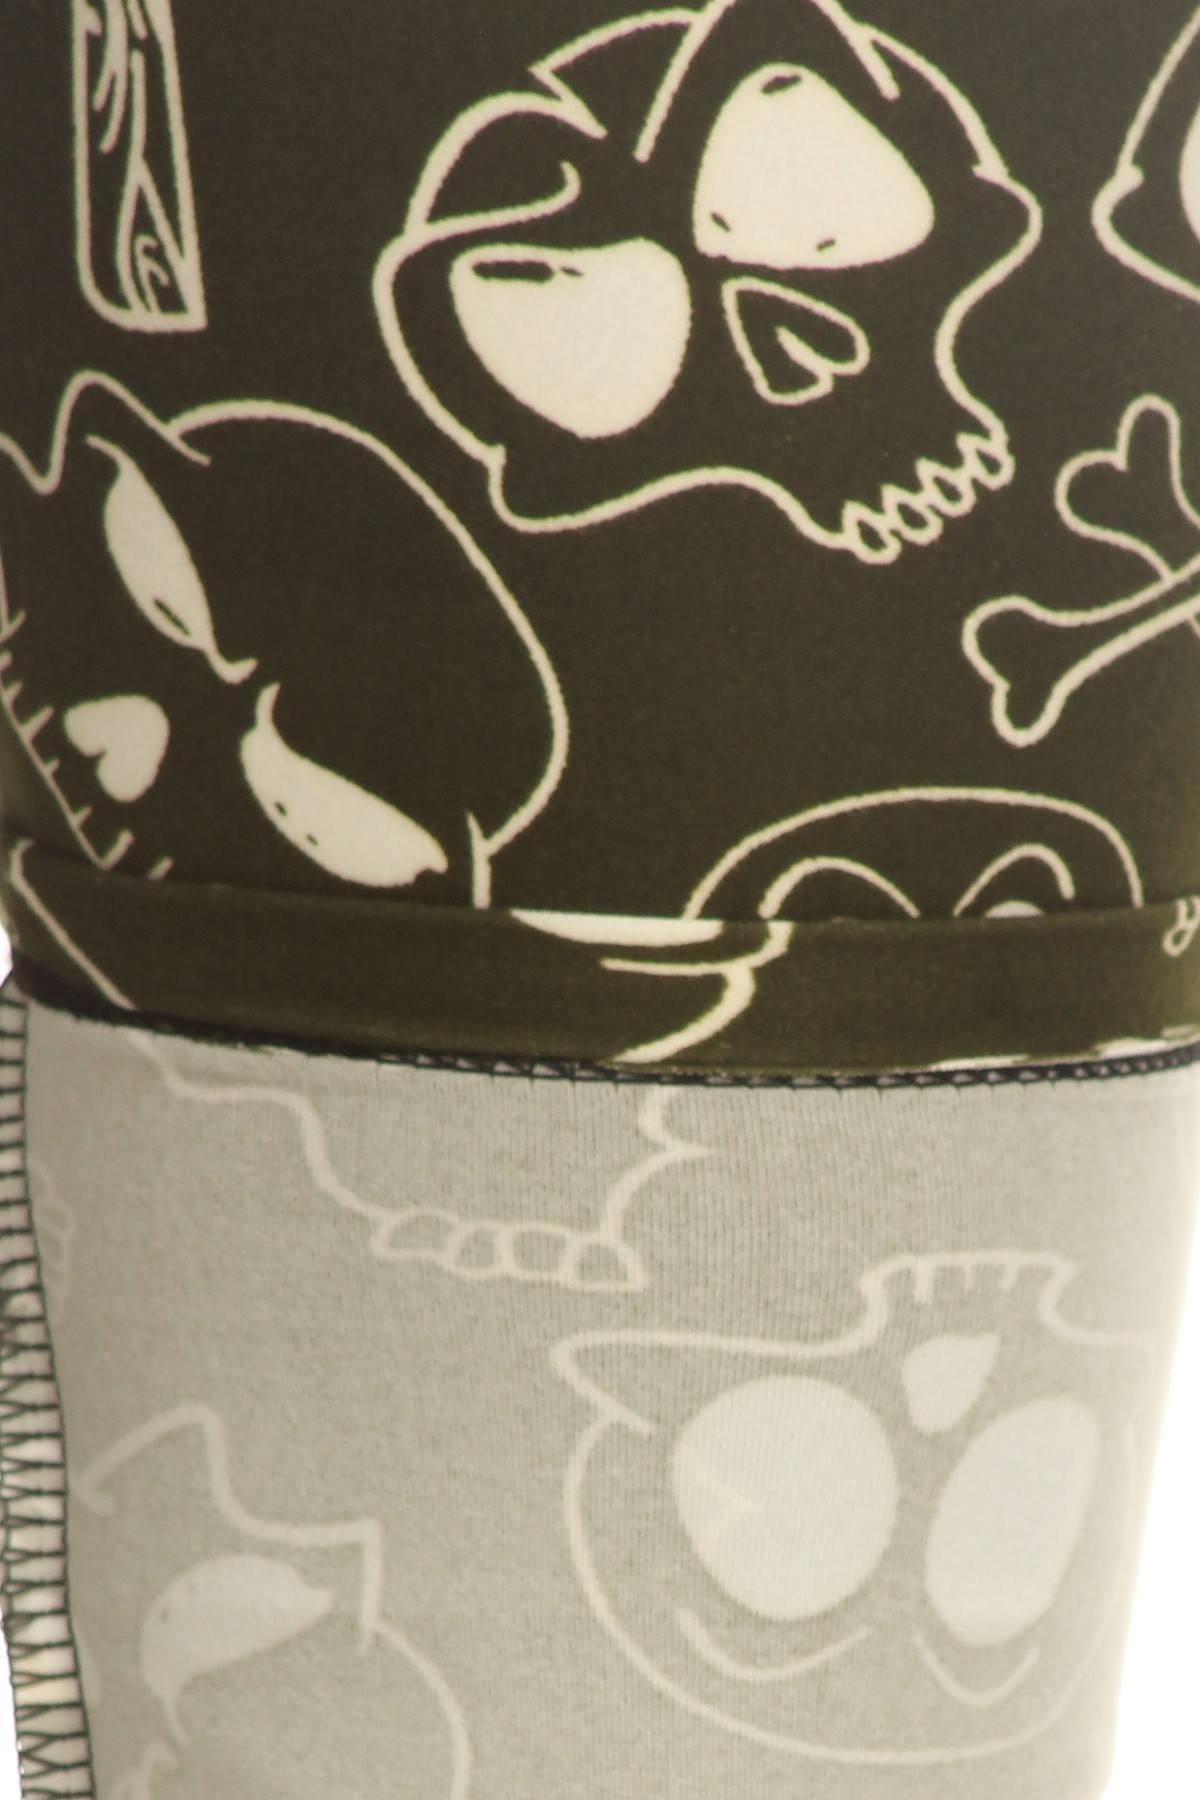 Skulls And Bones Graphic Printed Knit Legging With Elastic Waist Detail. High Waist Fit. - Pearlara